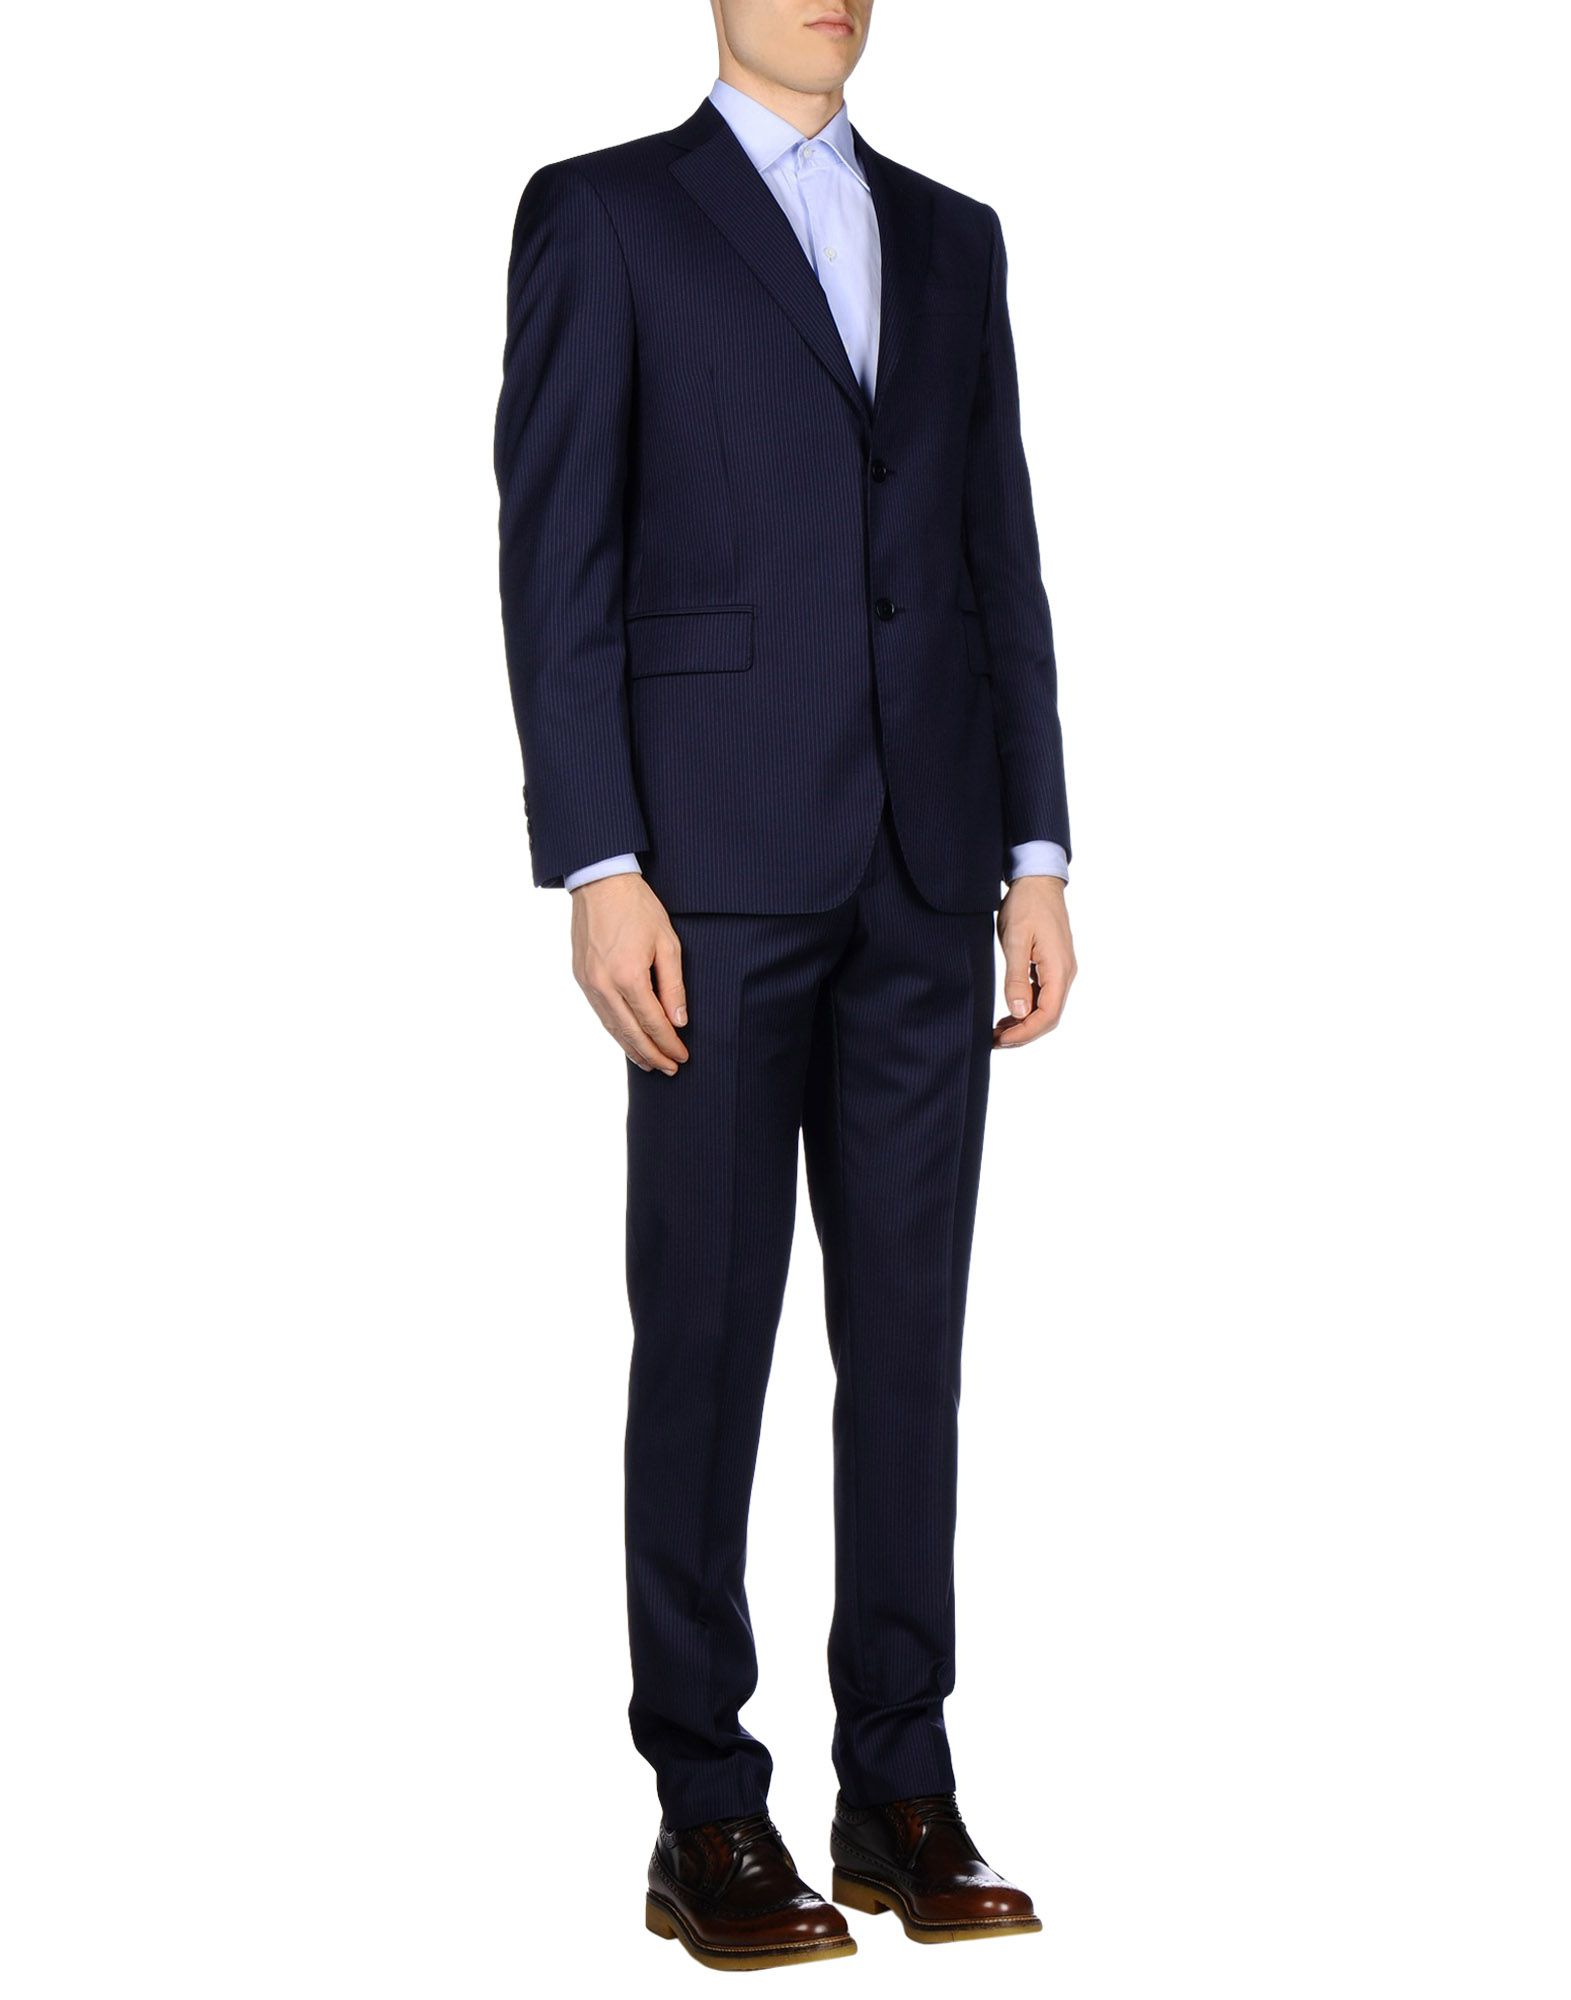 Lyst - Balmain Suit in Blue for Men